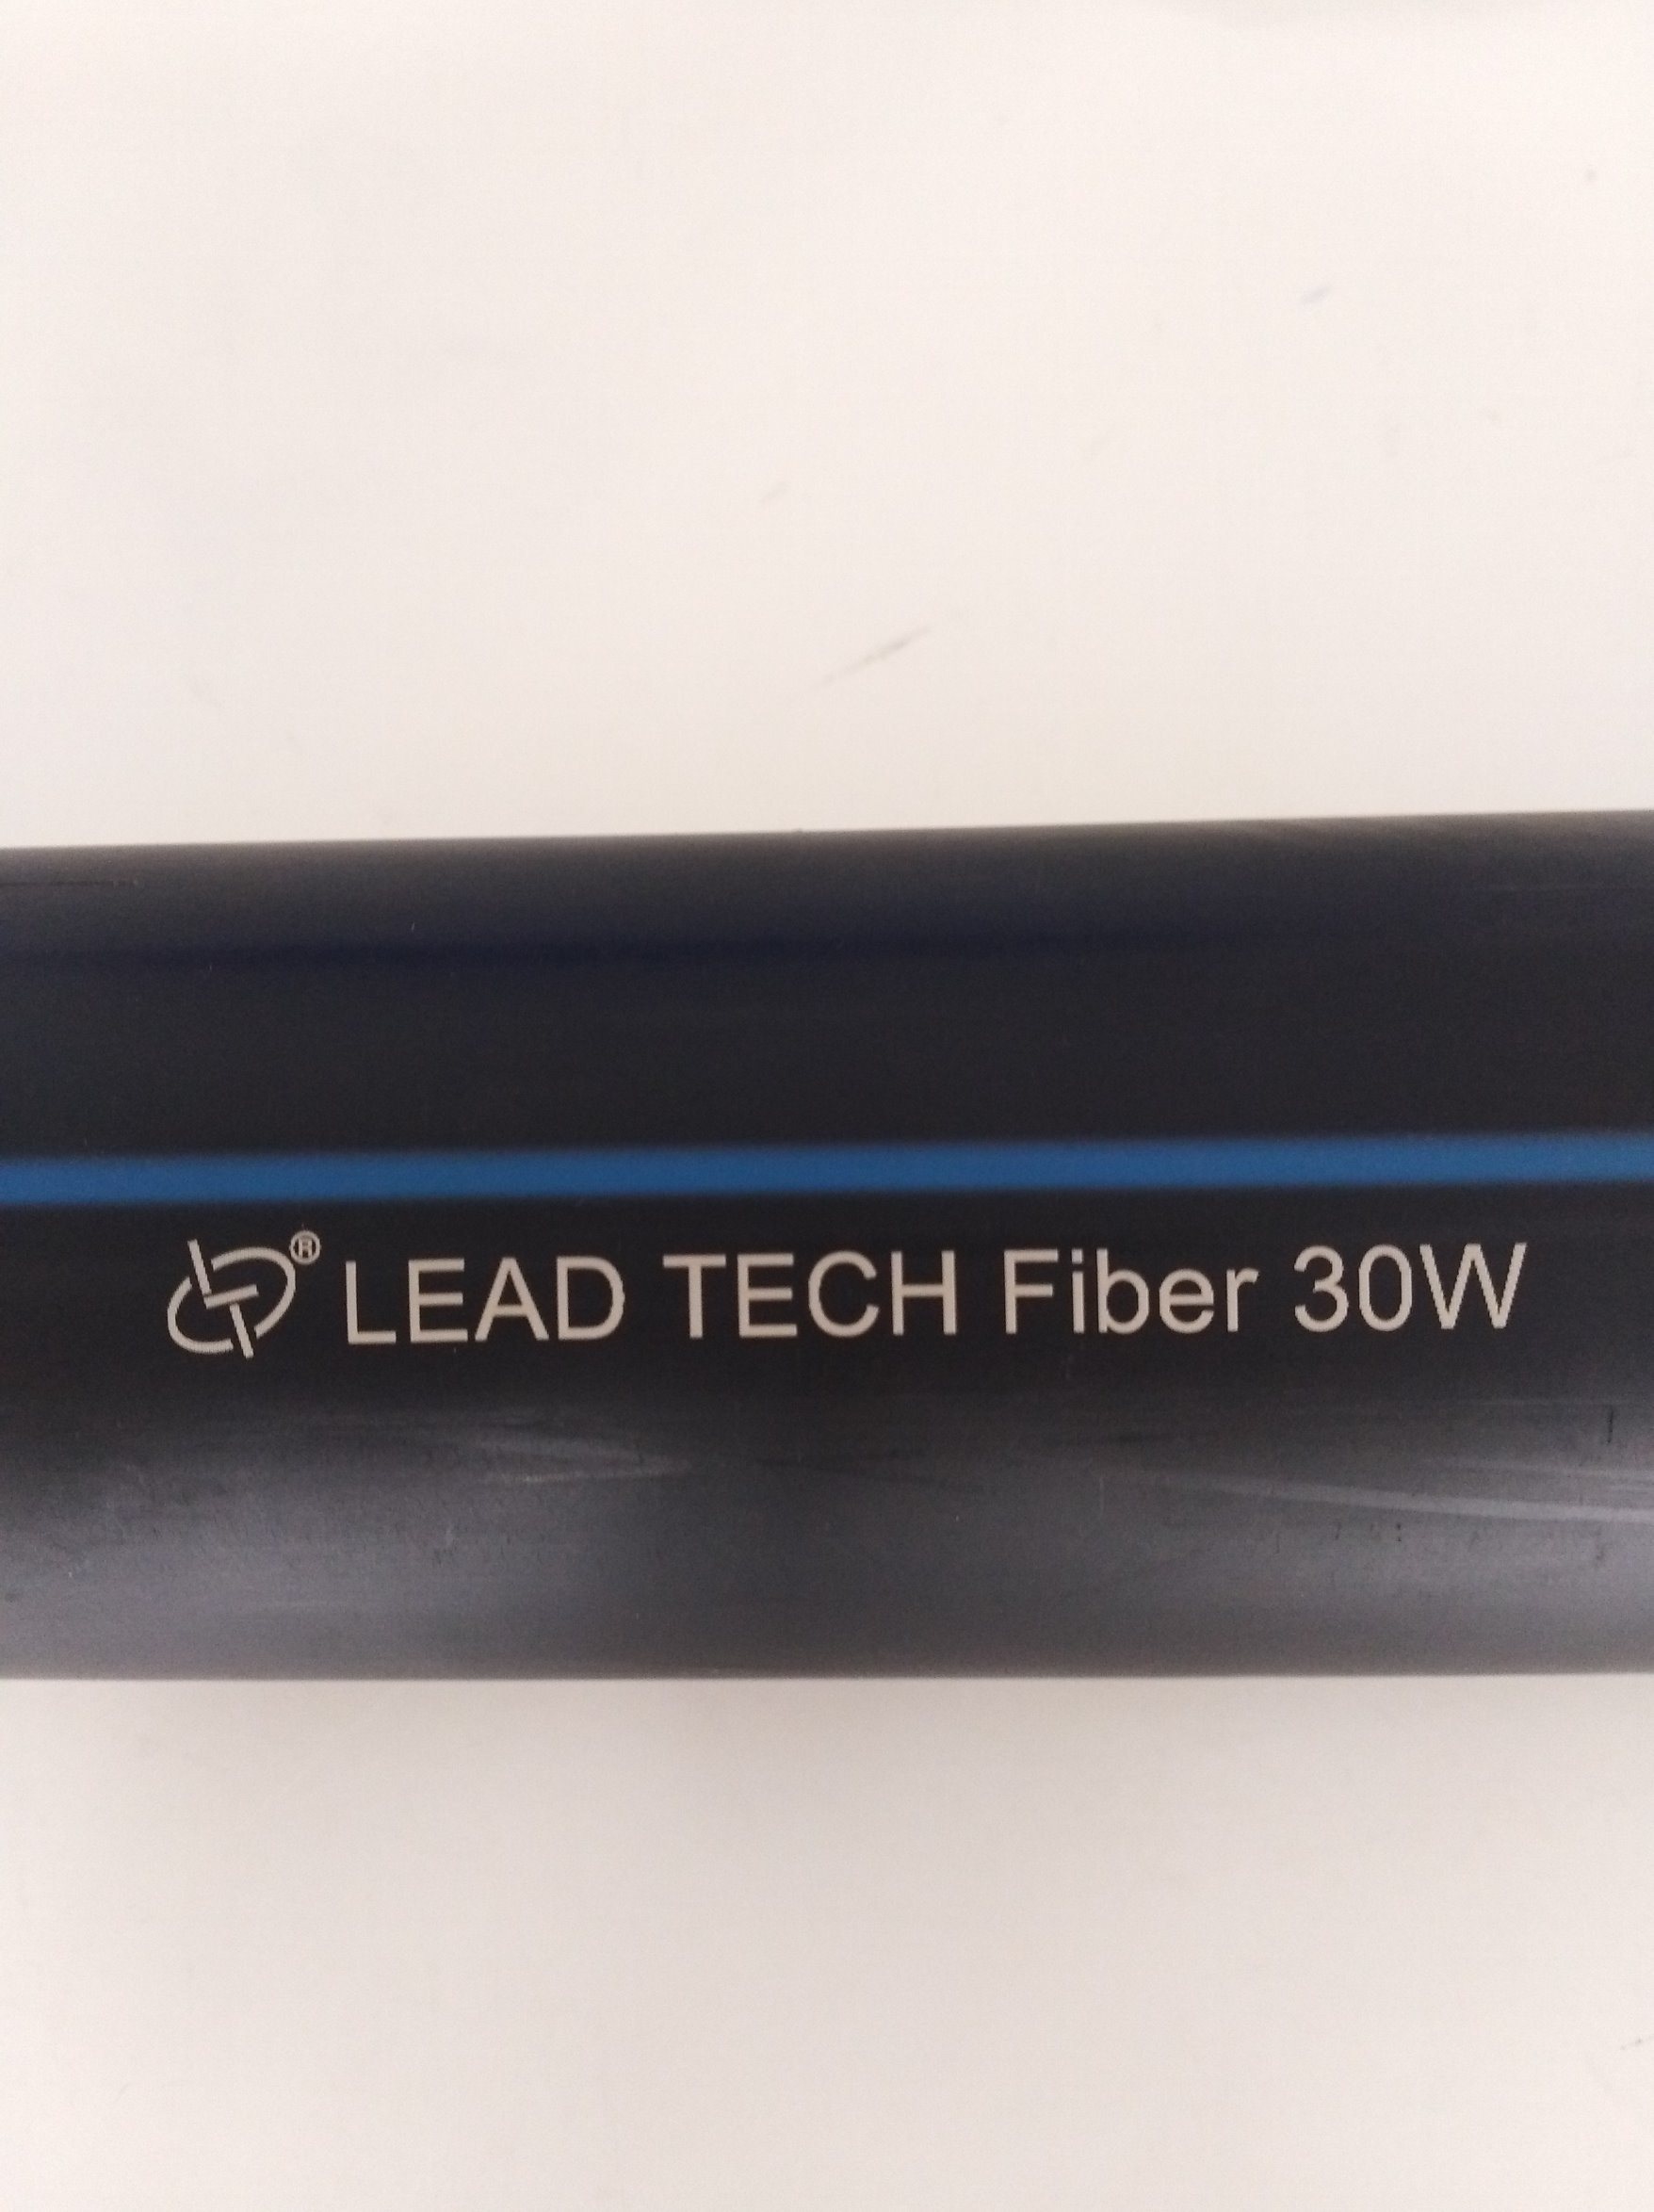 Lt8020f/Lt8030f/Lt8050f Fiber High Performance Economic PPR Hpec Laser Printer